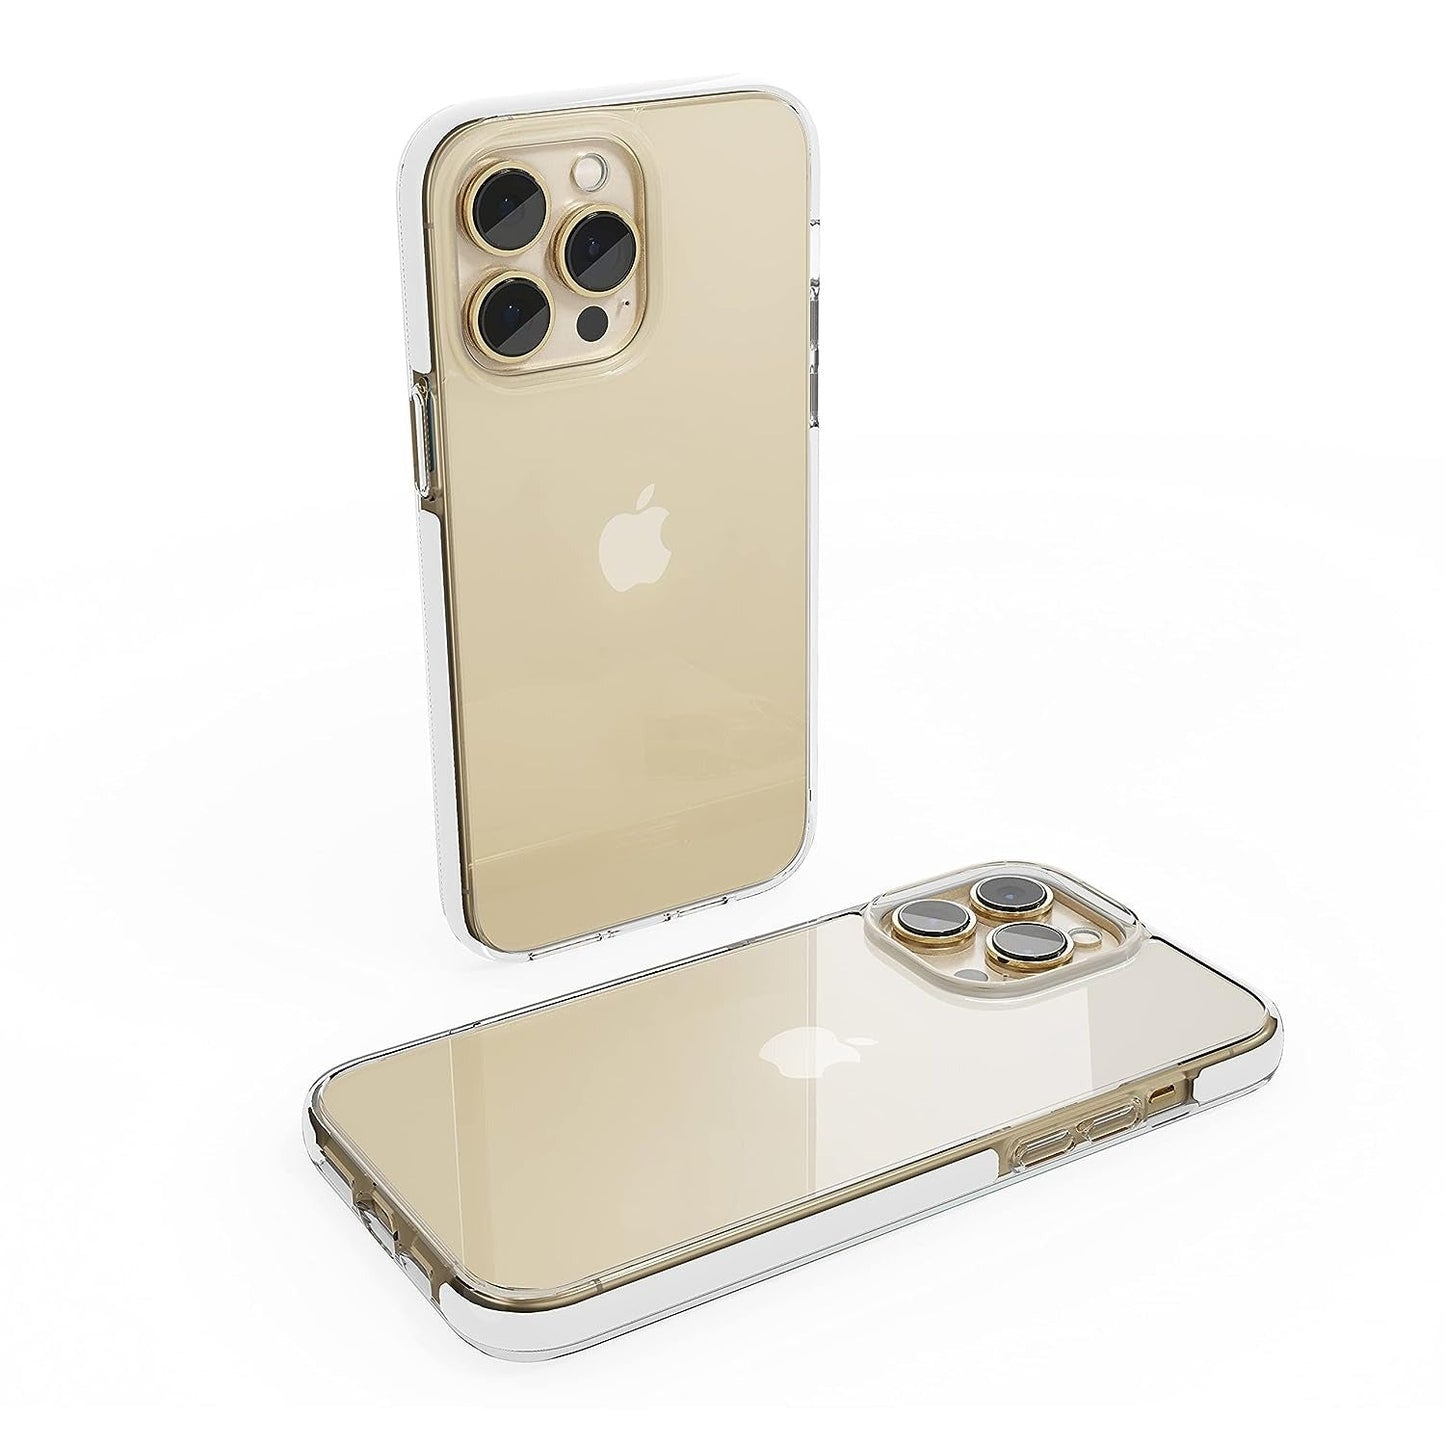 vaku-luxos®-guard-series-case-for-iphone-14-pro-white8905129022433